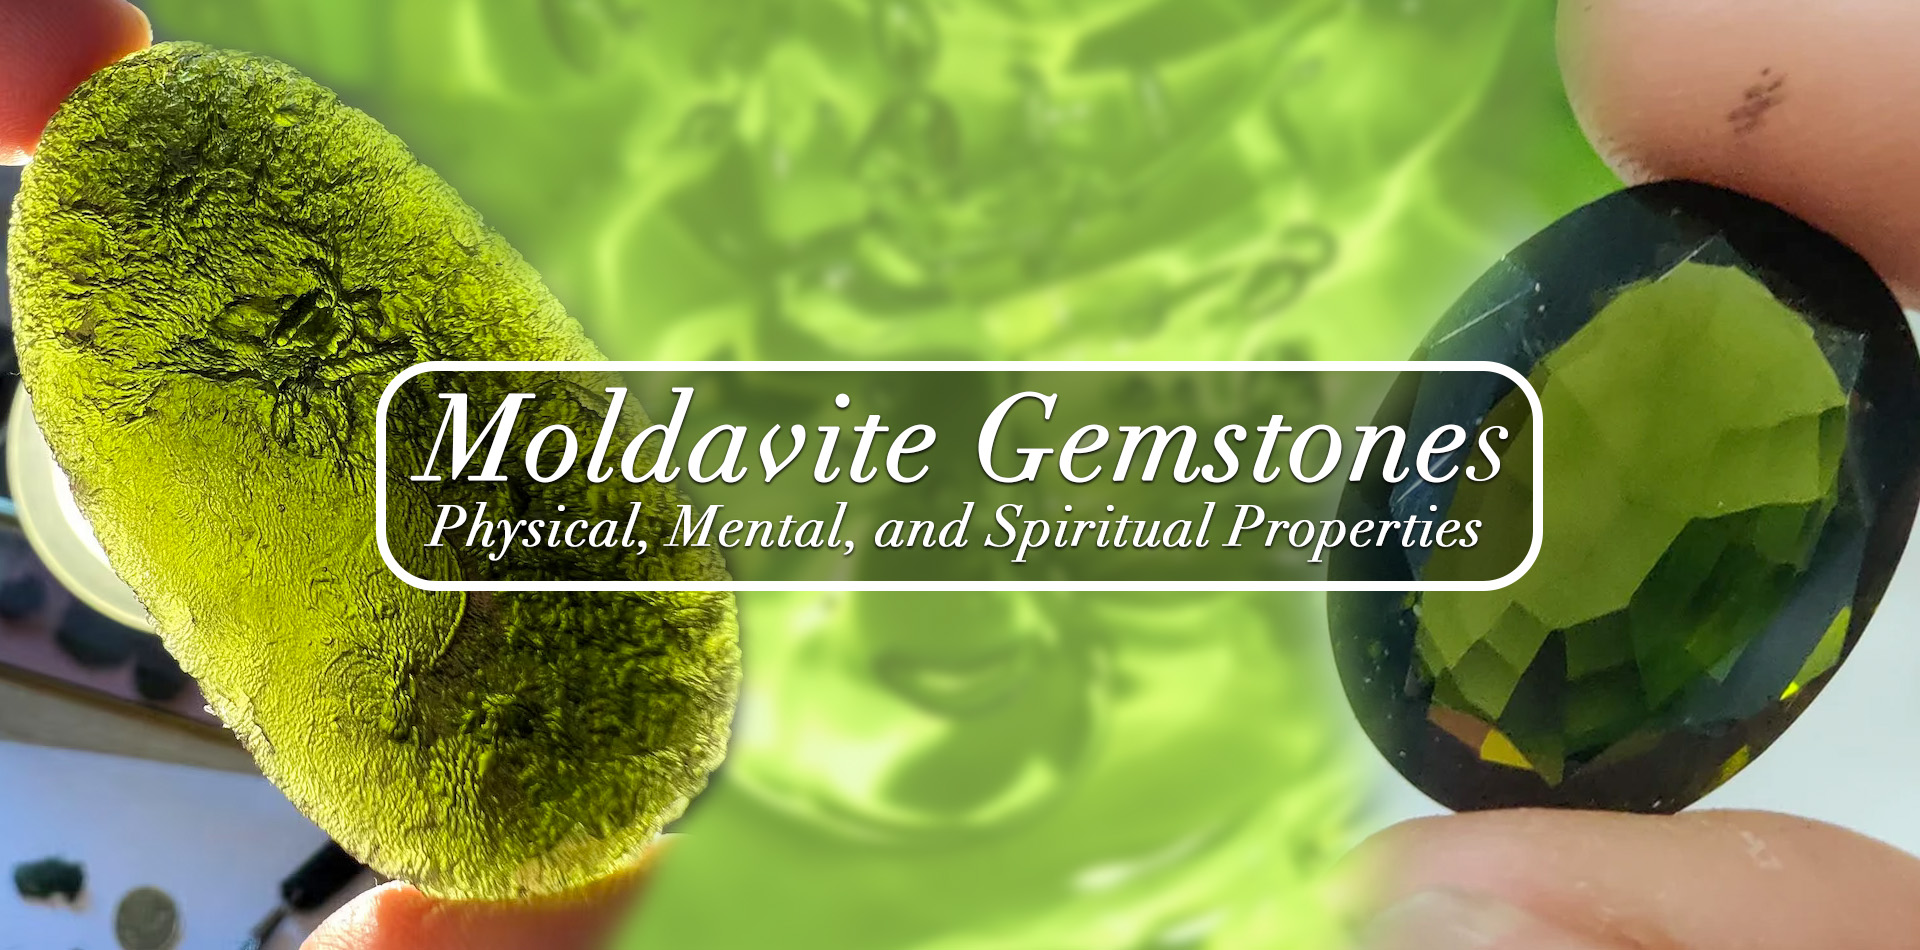 Moldavite Gemstones: Physical, Mental, and Spiritual properties